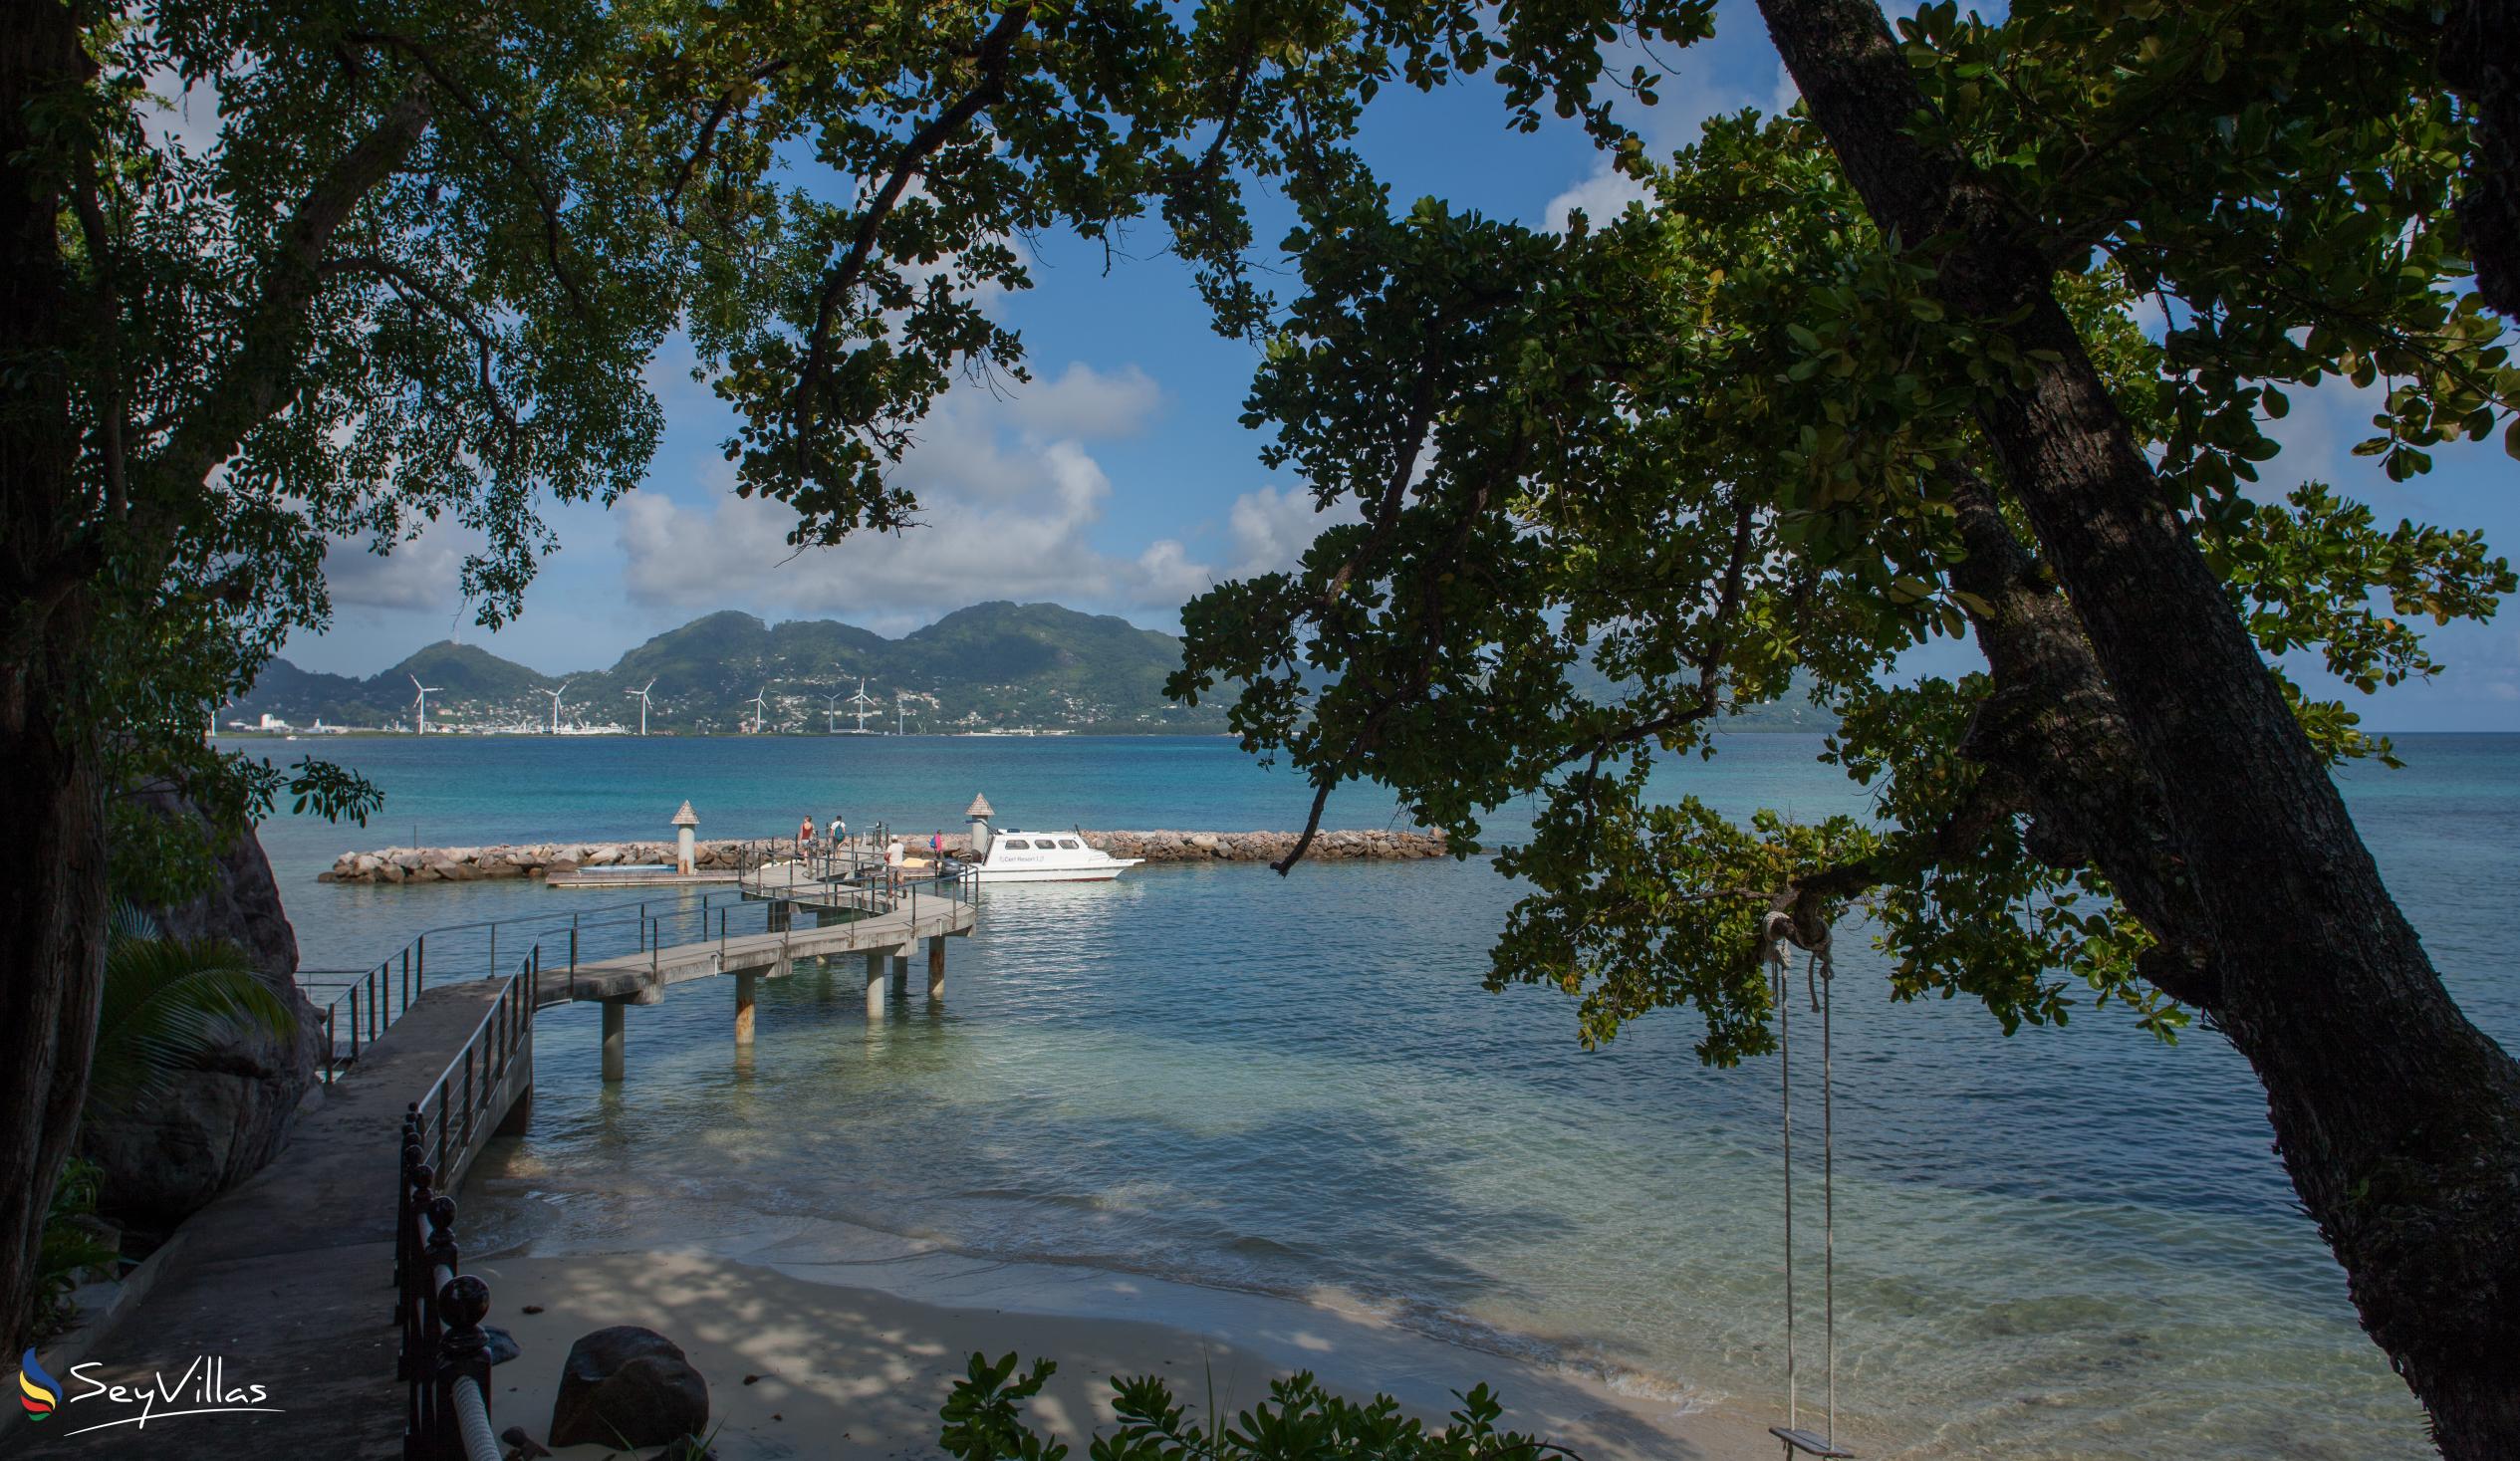 Foto 5: Cerf Island Resort - Location - Cerf Island (Seychelles)